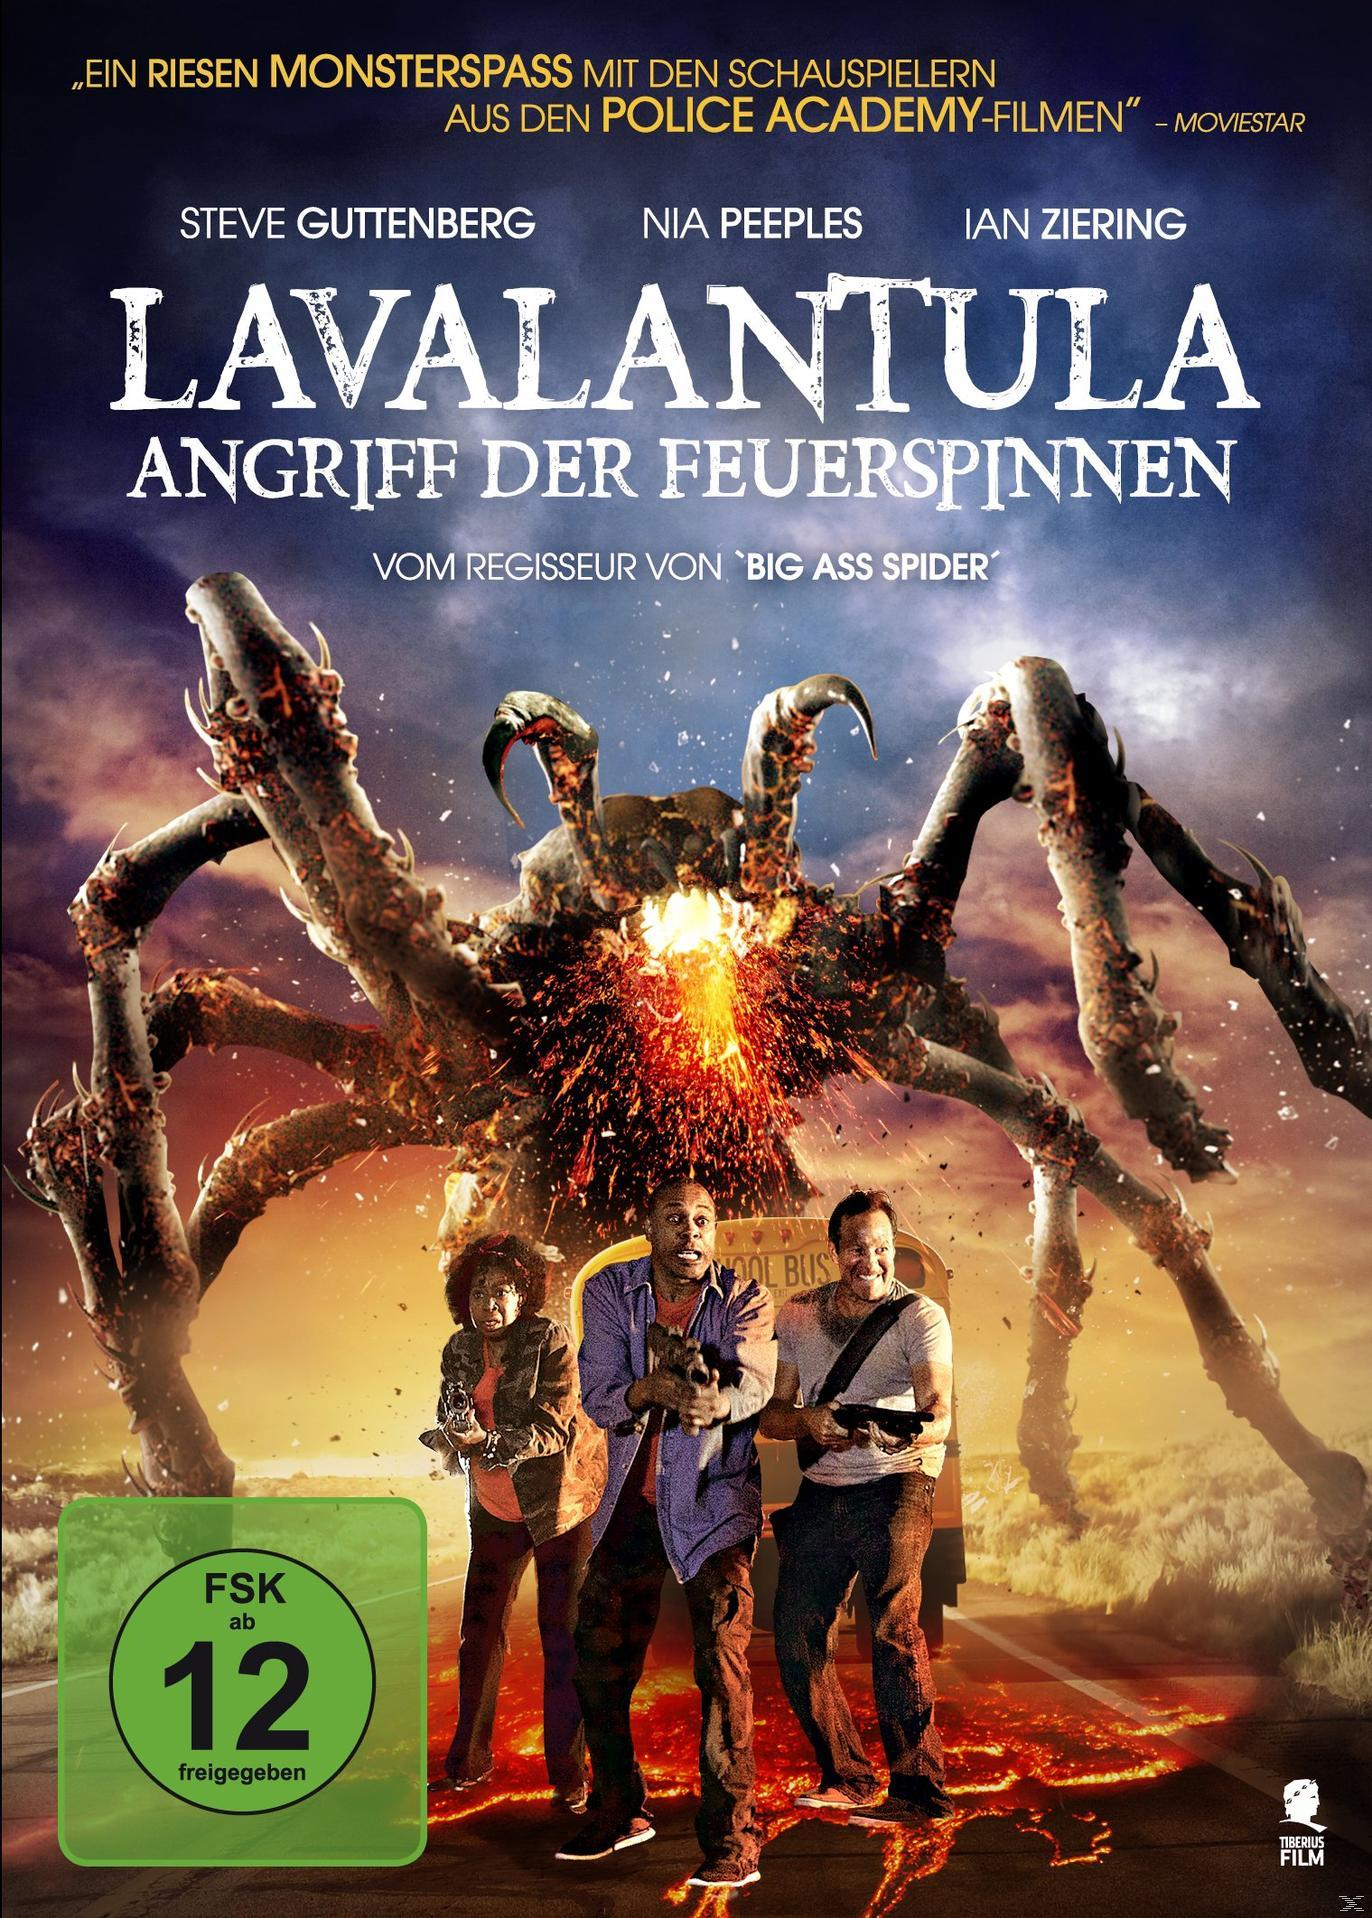 Angriff DVD der Feuerspinnen Lavalantula -